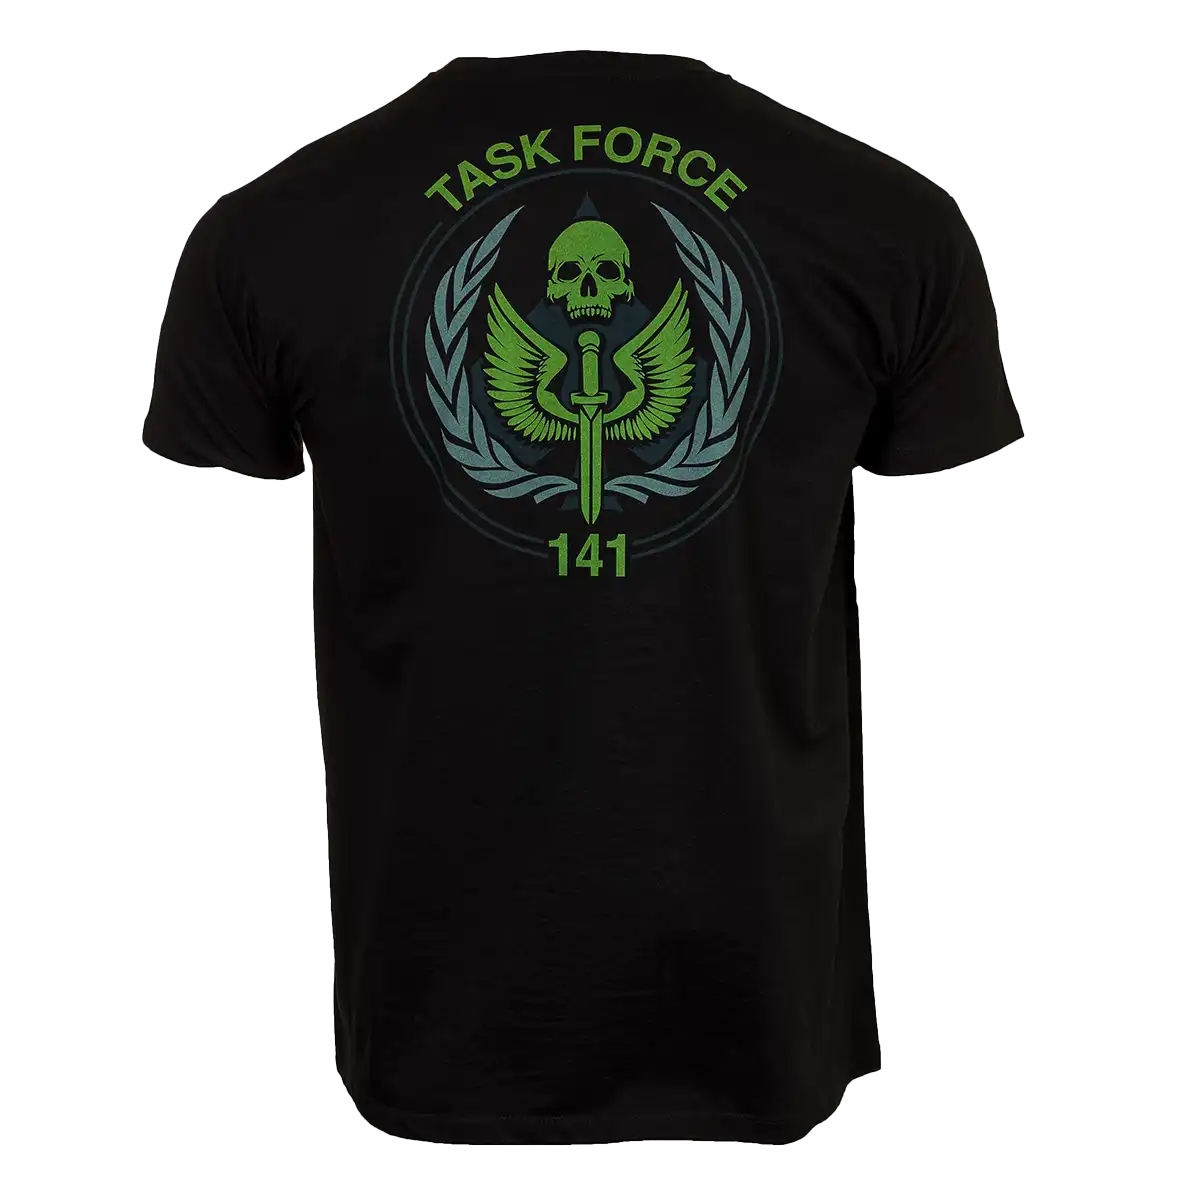 Call of Duty Modern Warfare II T-Shirt "Task Force 141" Black M